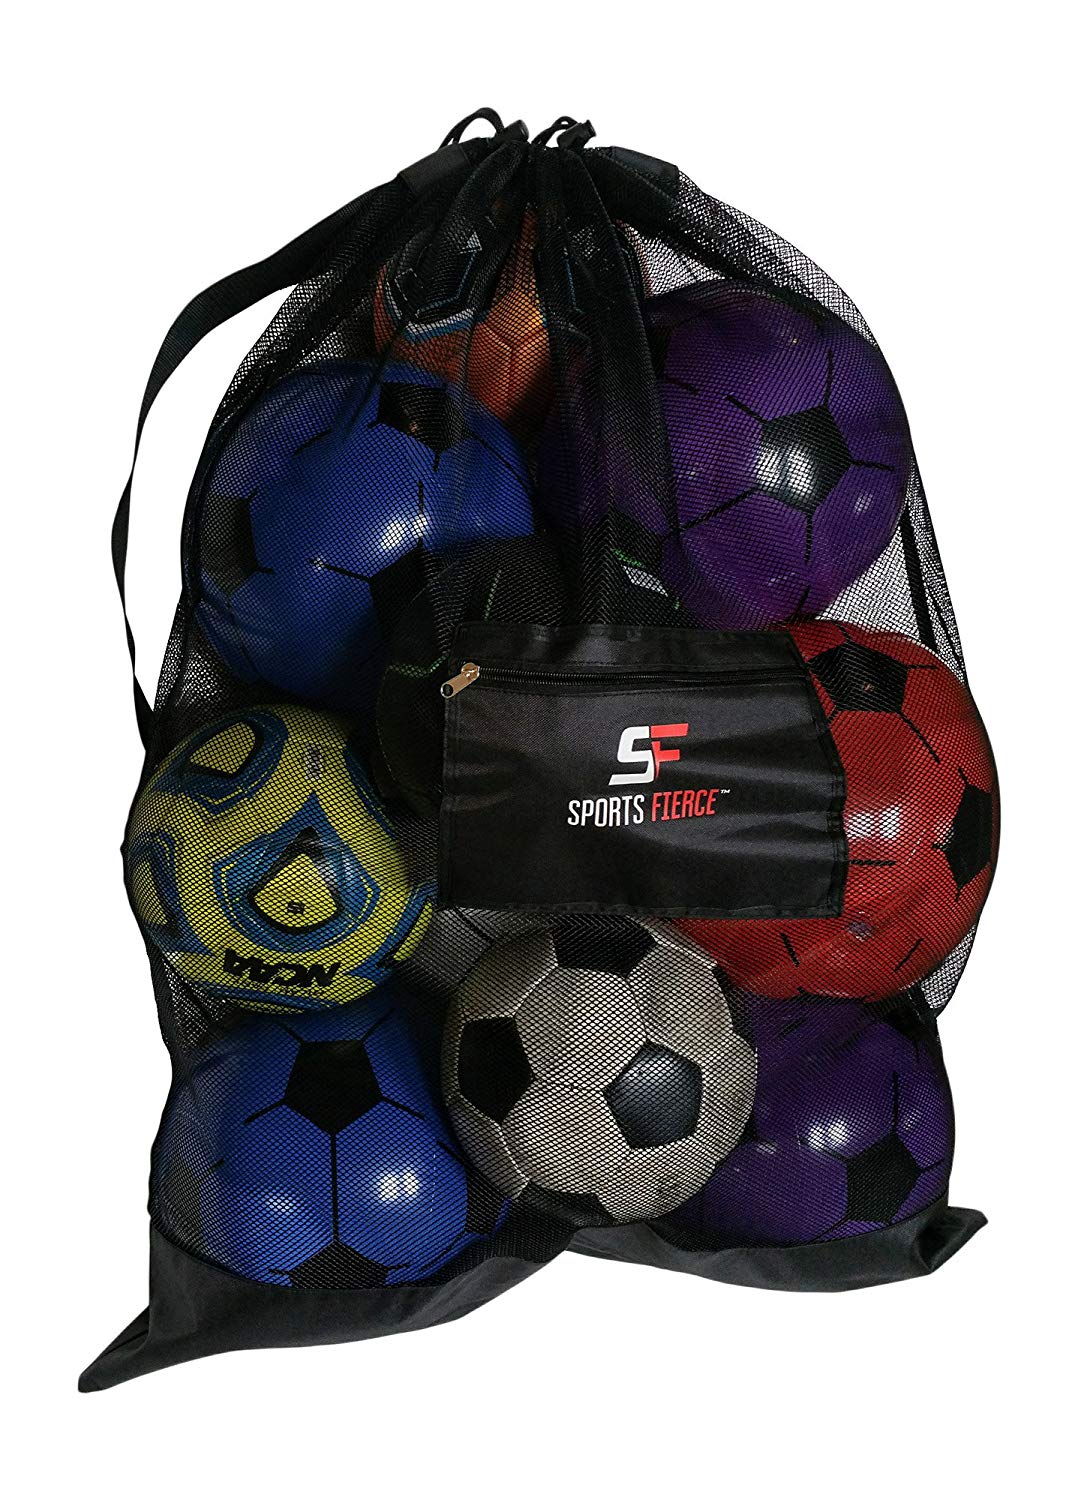 Exter-large soccer ball bag heavy duty sports mesh bag